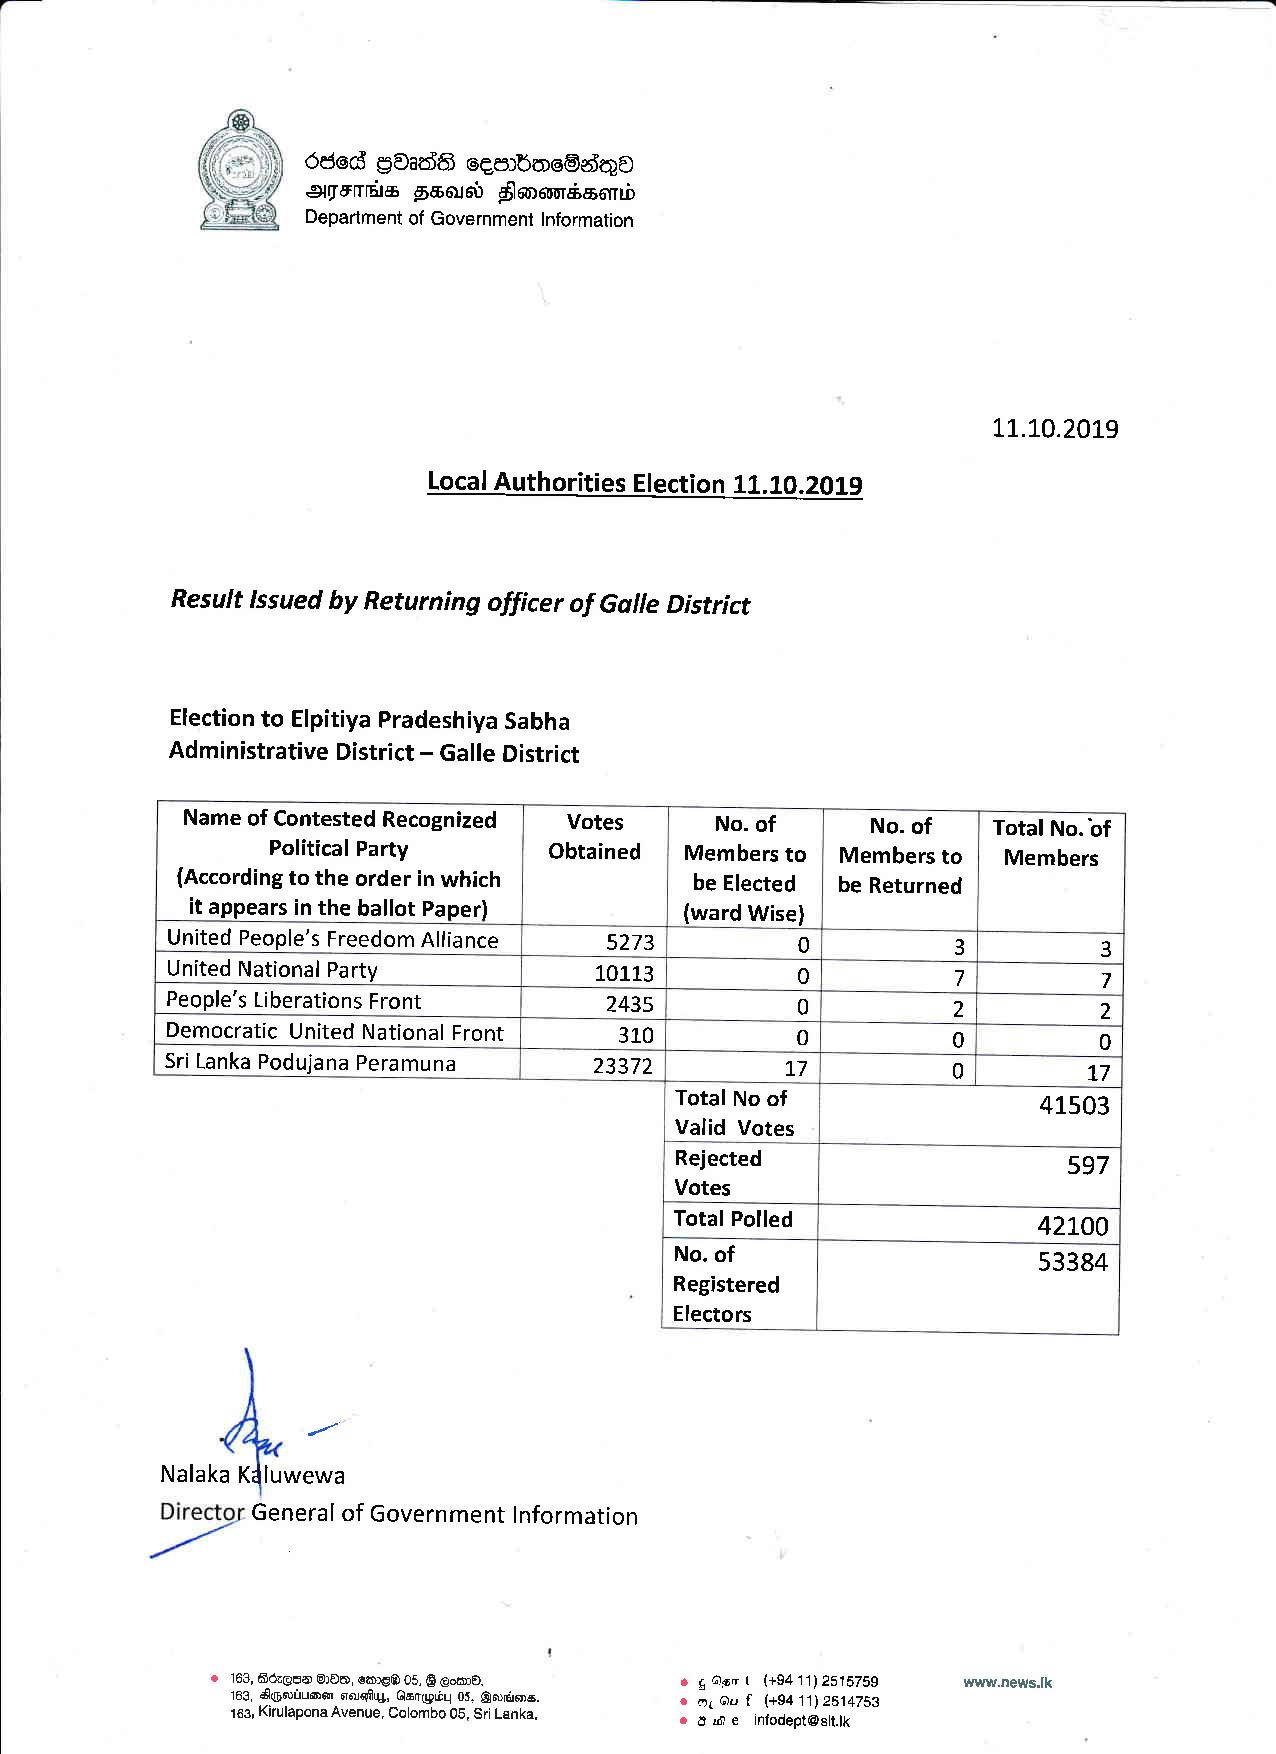 Elpitiya Pradeshiya Sabha Results page 001